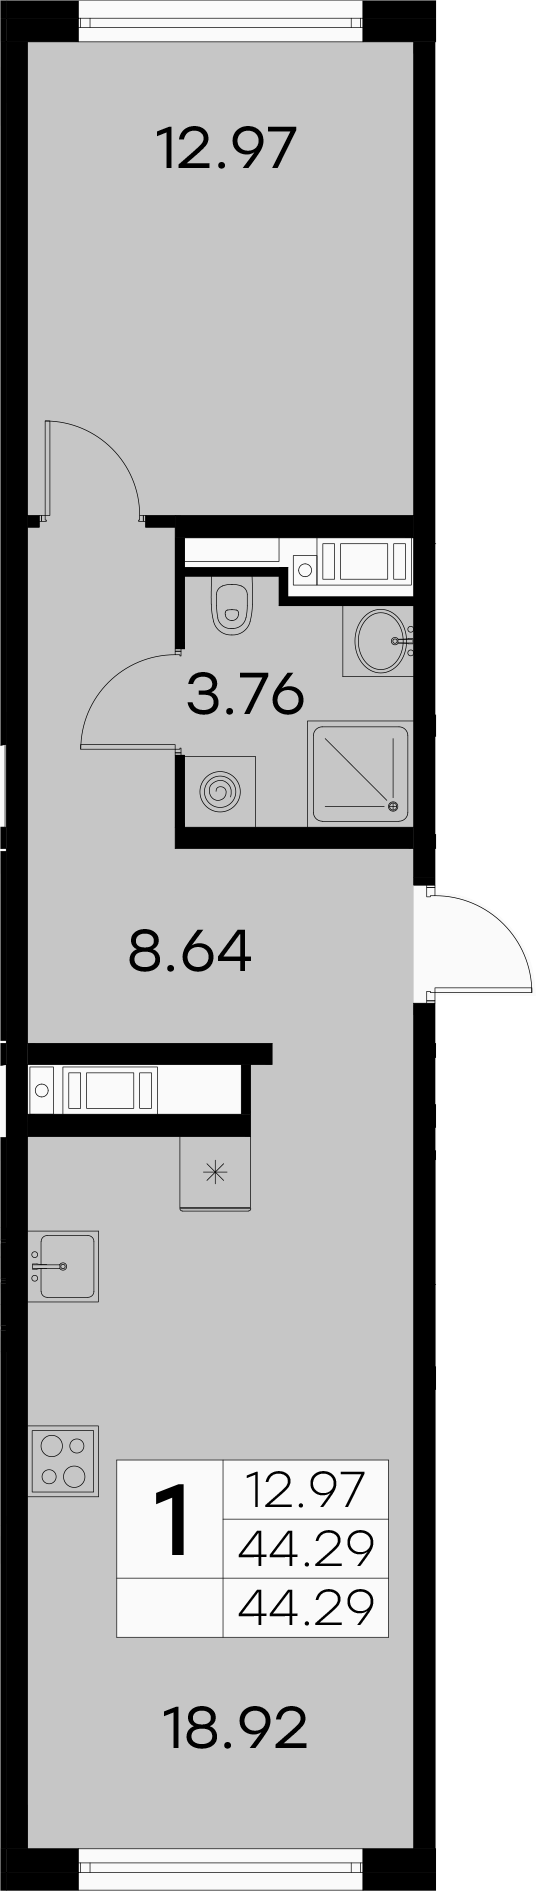 2Е-к.кв, 44.29 м²